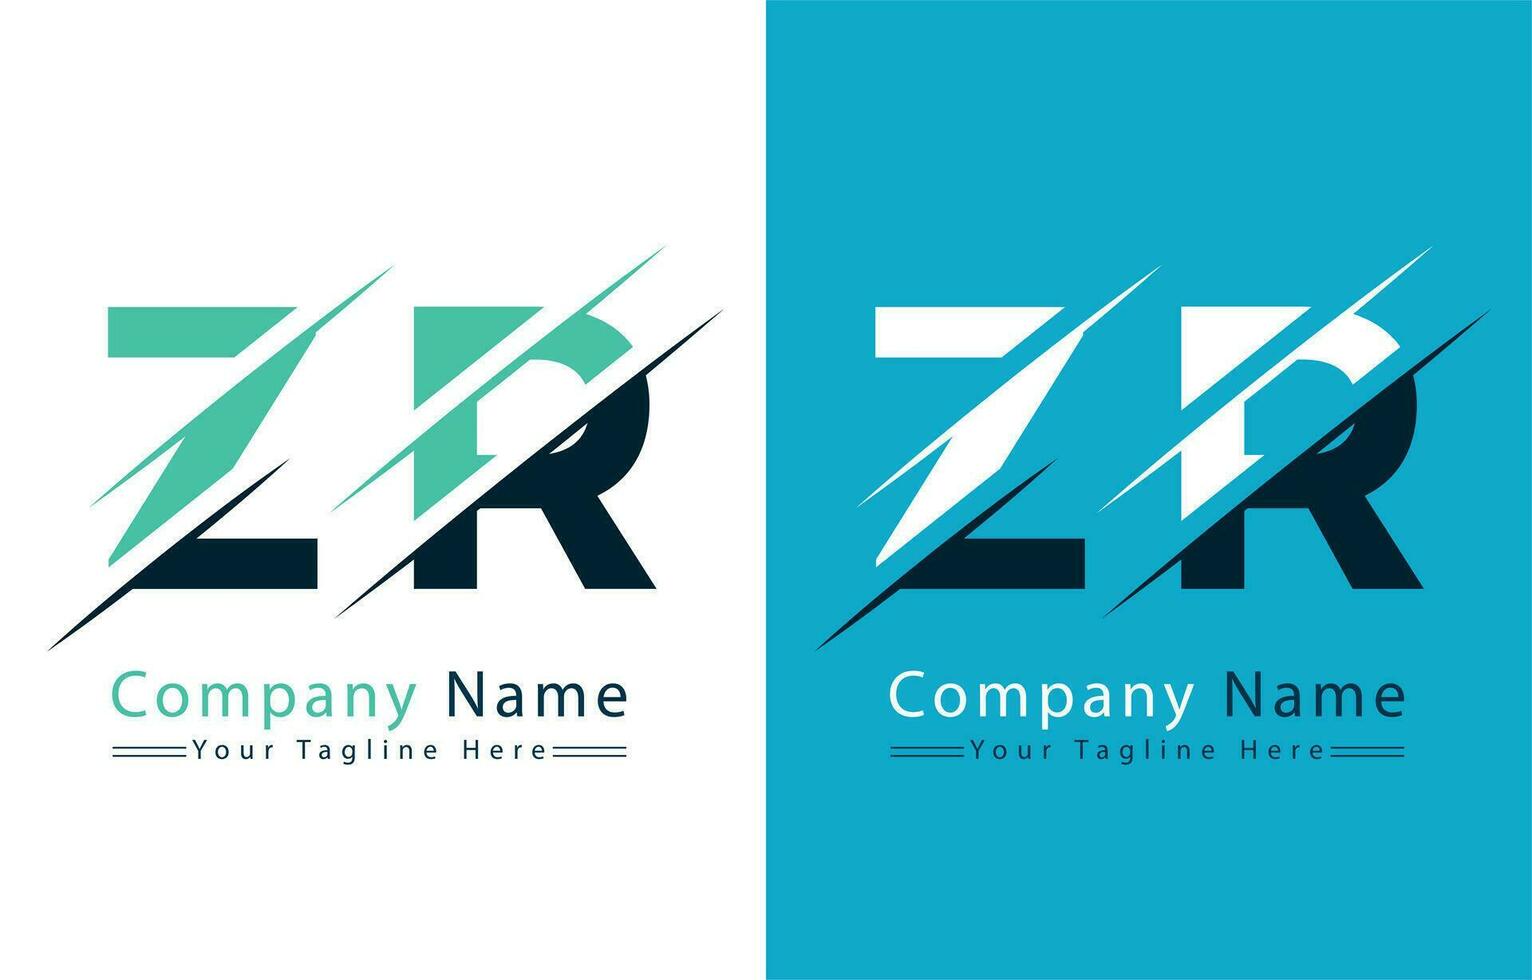 zr carta logotipo vetor Projeto modelo elementos